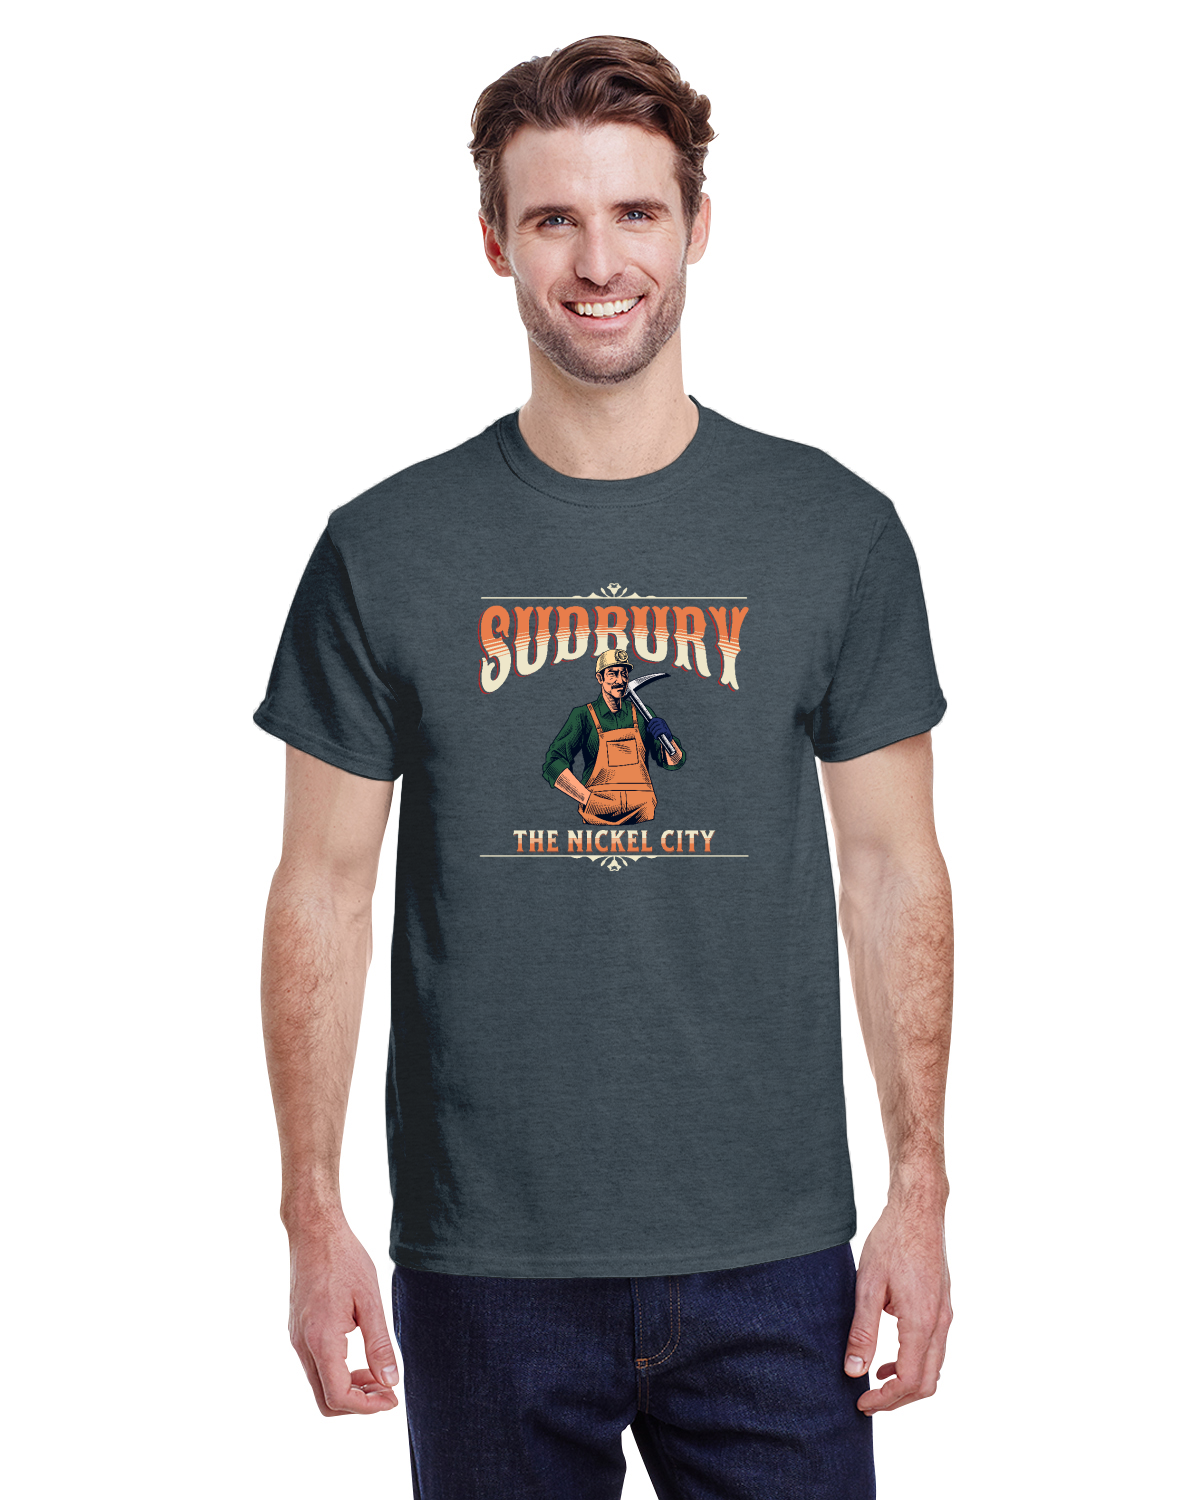 Canadian City T-Shirt, Sudbury, Ontario, Miner Design, The Nickel City, Men's T-Shirt